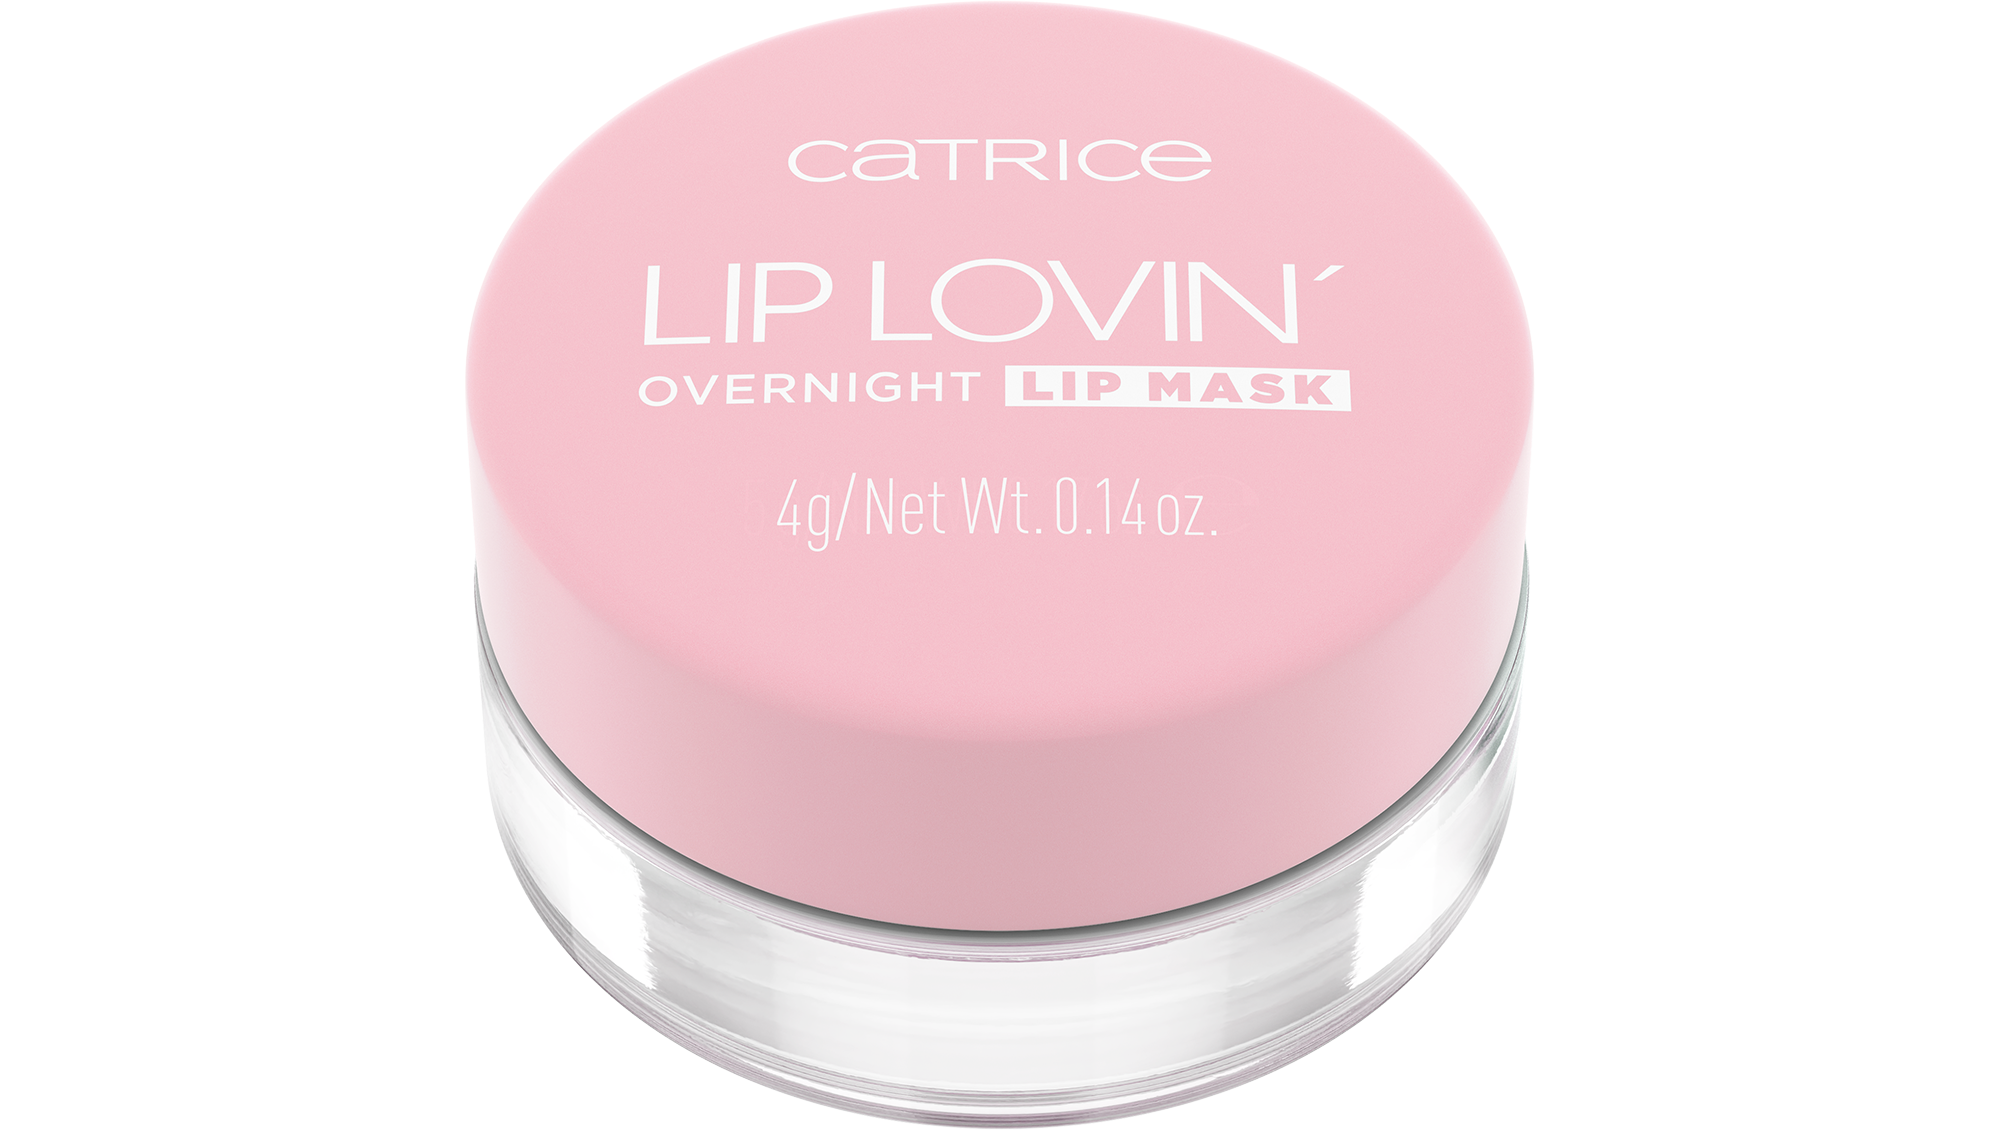 Lip Lovin' Overnight Lip Mask